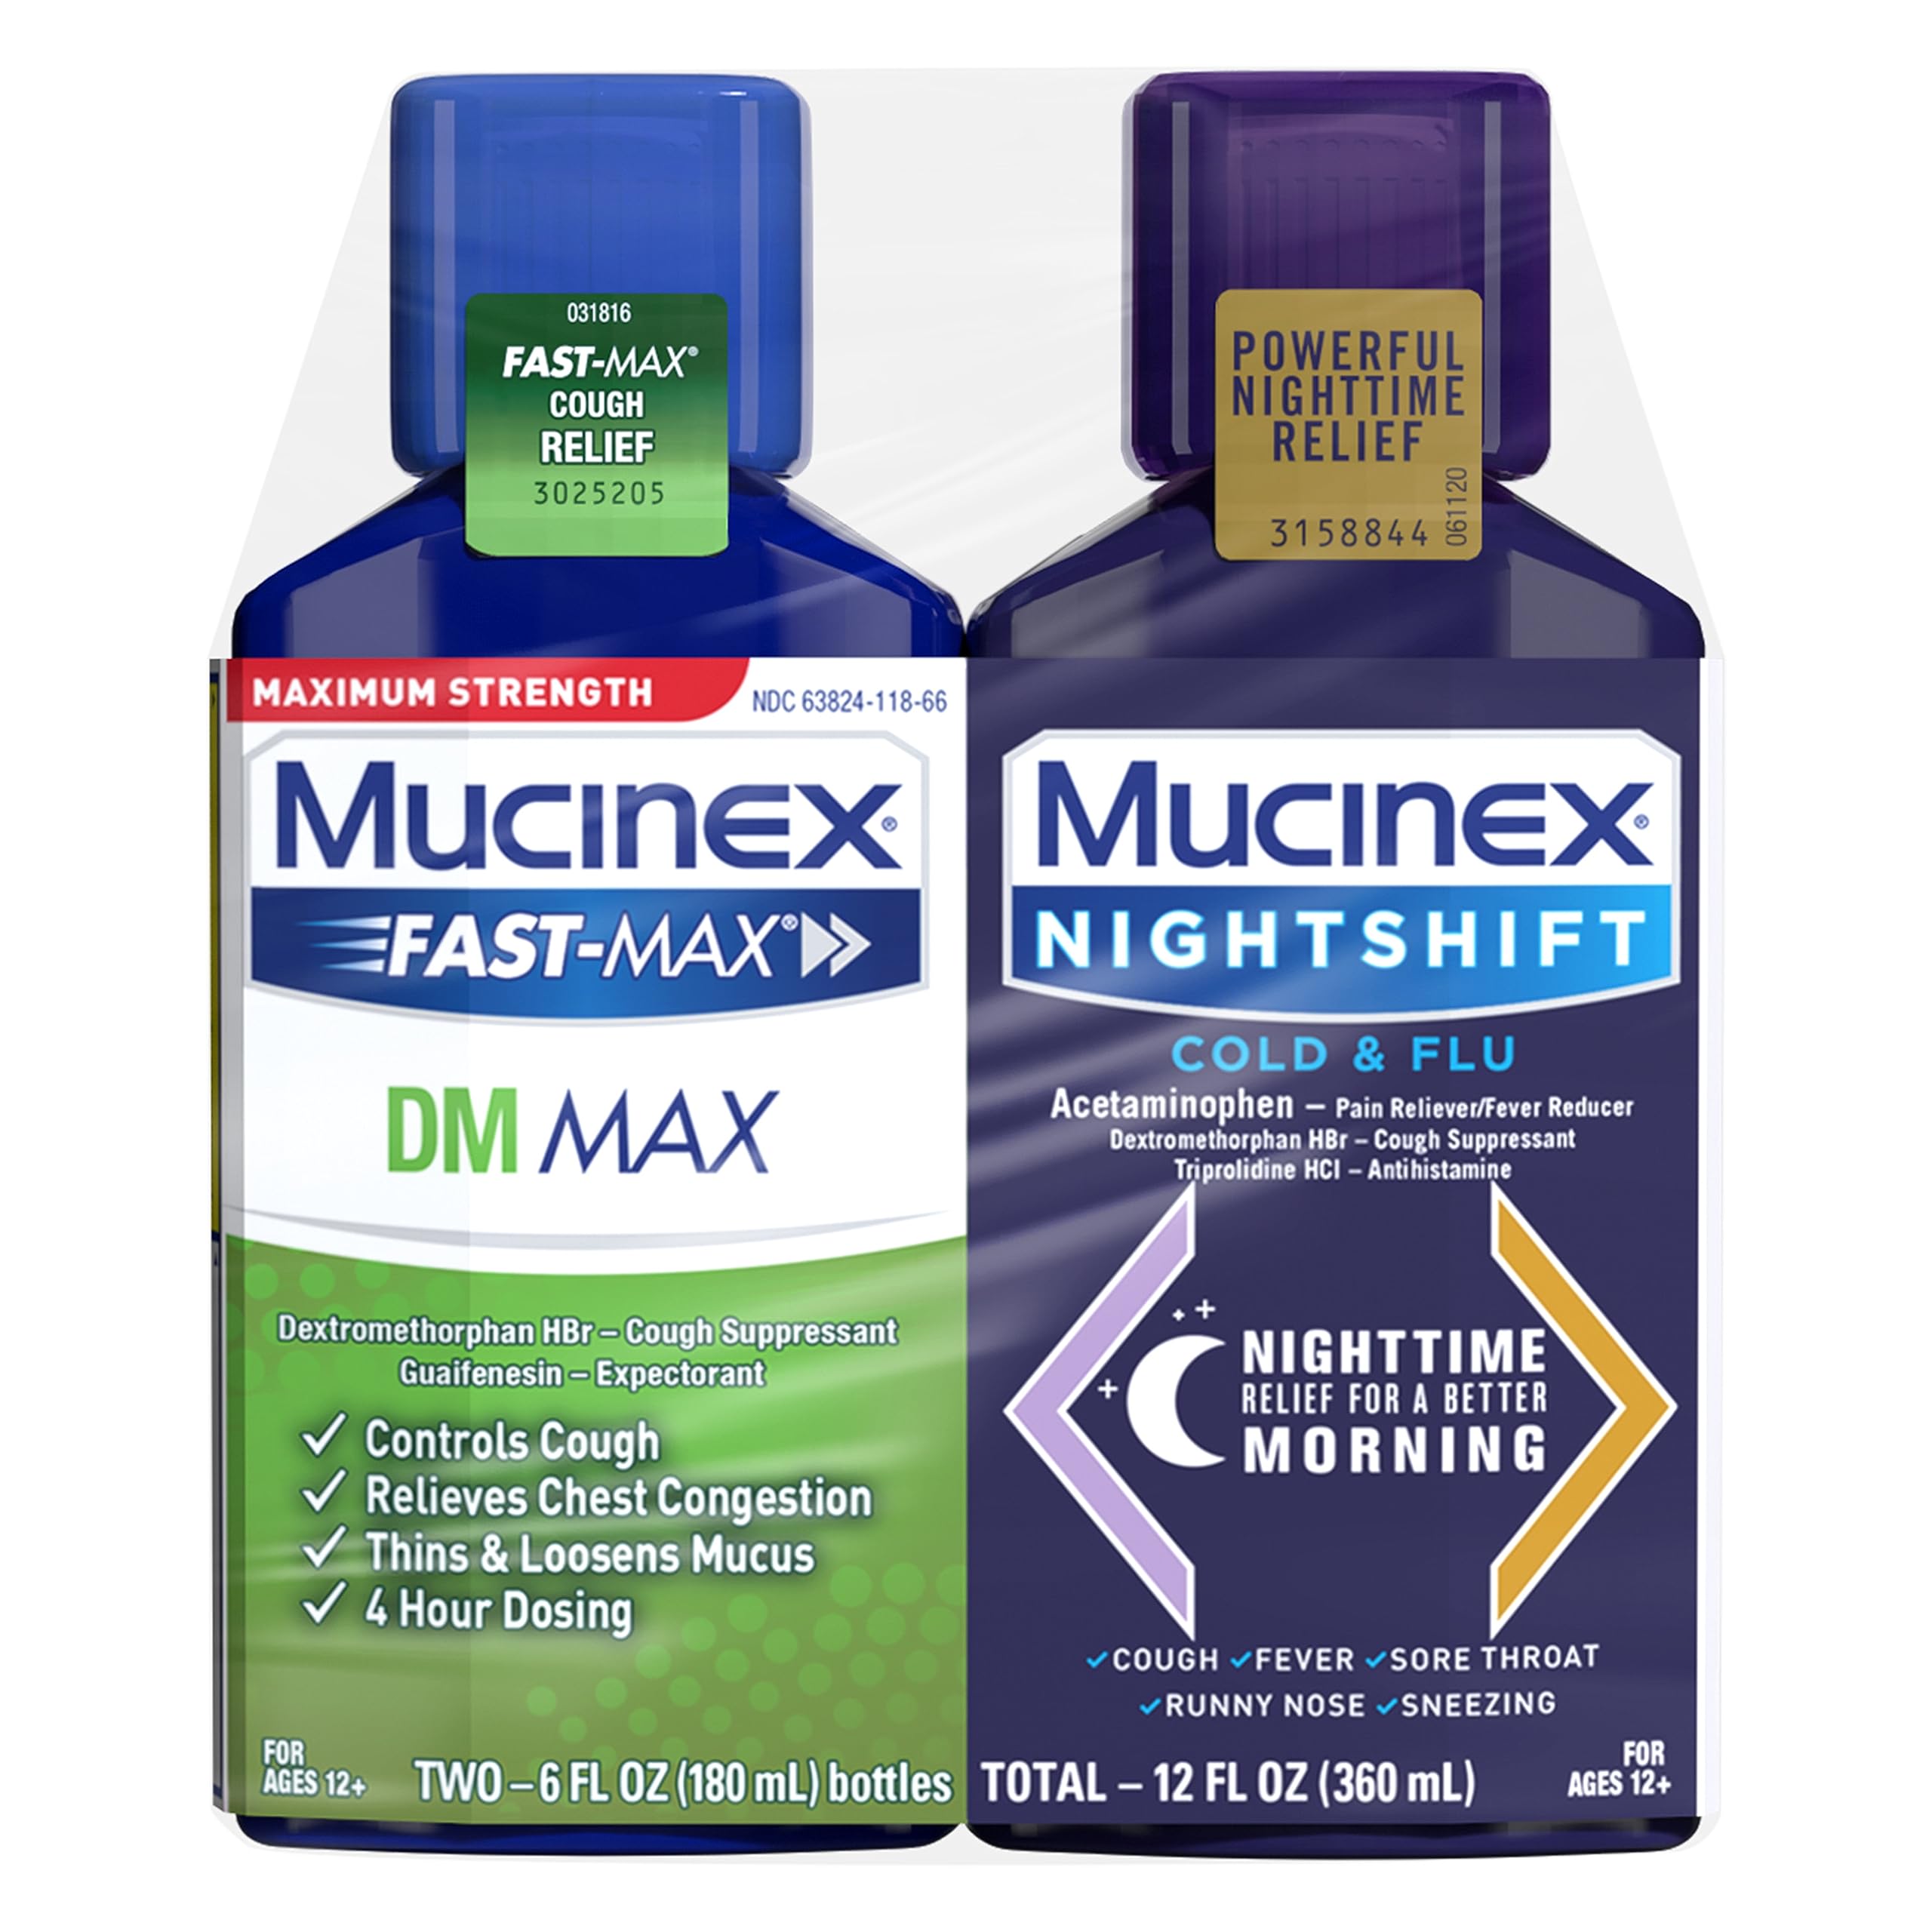 Maximum Strength Mucinex FastMax DM Max & Mucinex Nightshift Cold & Flu Liquid (2 x 6 fl. oz.) Thins & Loosens Mucus, Relieves Cough & Chest Congestion, Pain, Fever, Sneezing, Sore Throat, Runny Nose